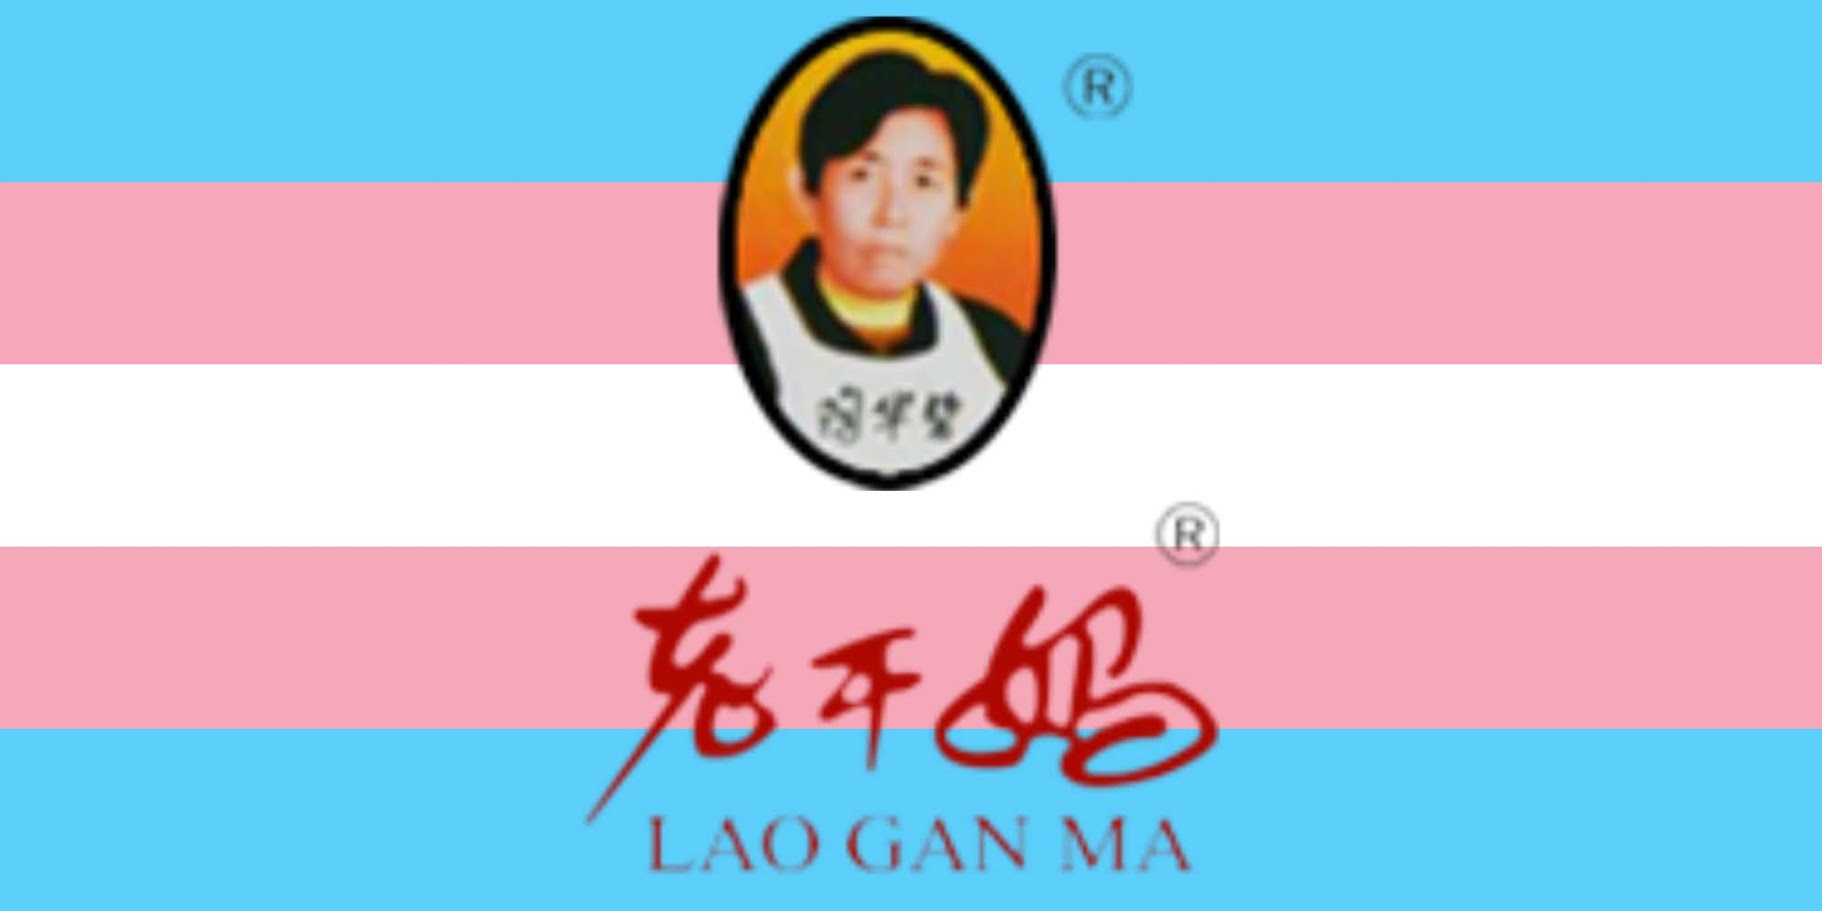 lao gan ma logo on the trans flag